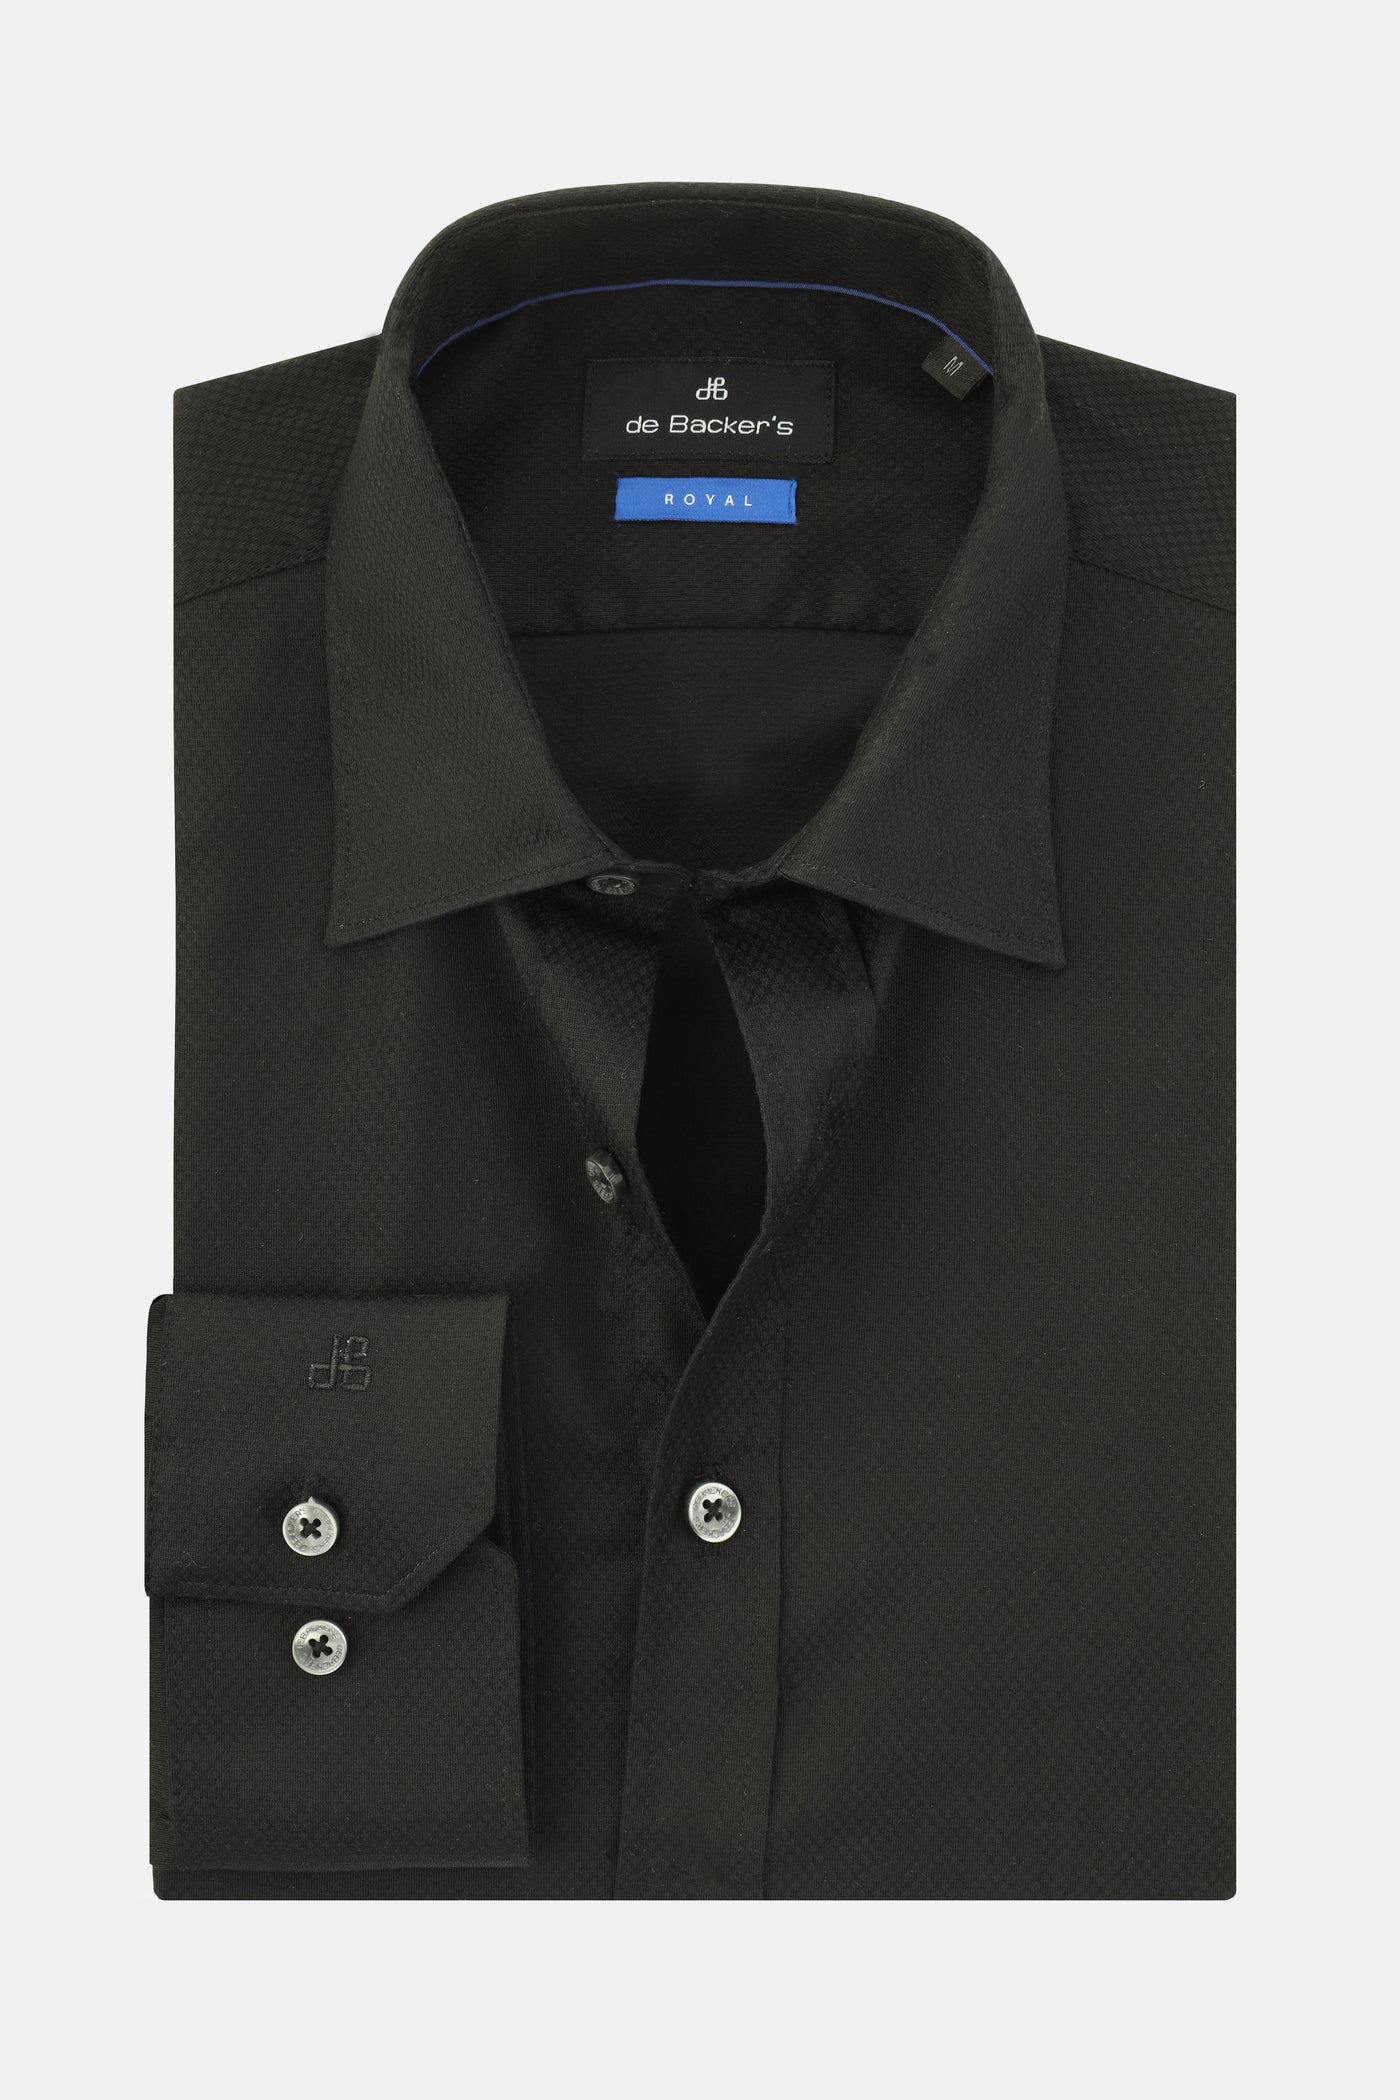 Jacquard Black Cotton Smart Casual Shirt